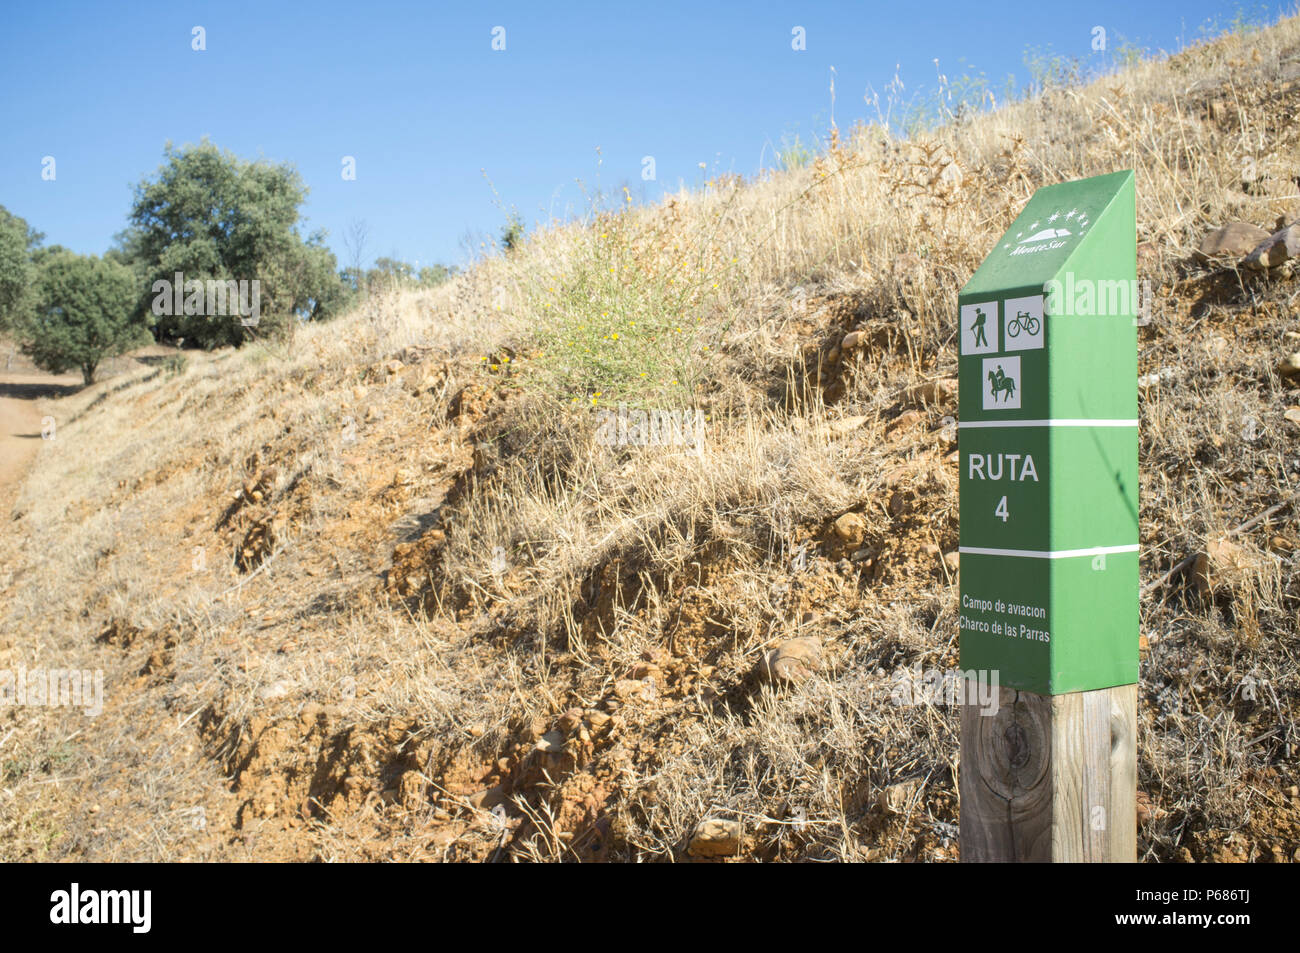 Saceruela, Spanien - 2. September 2017: Holz- Schild zum Flugplatz Trekking Route an Saceruela Ortsrand, Region La Mancha, Spanien Stockfoto